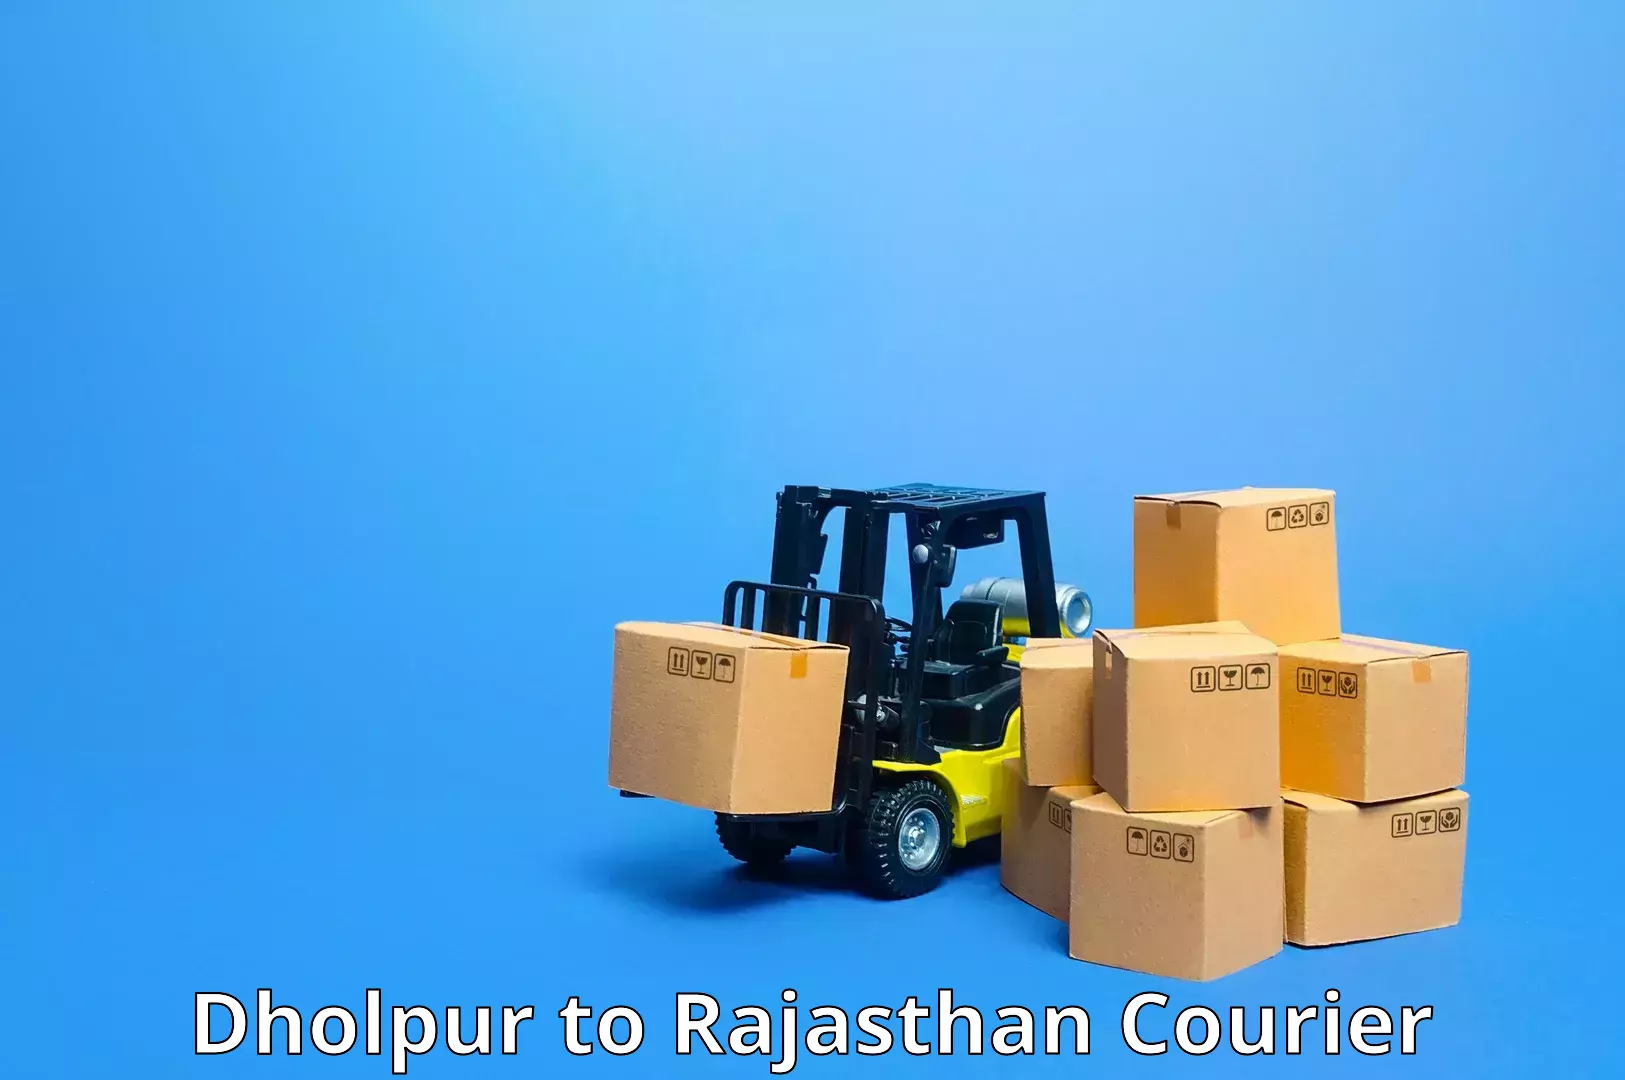 Global logistics network Dholpur to Bharatpur